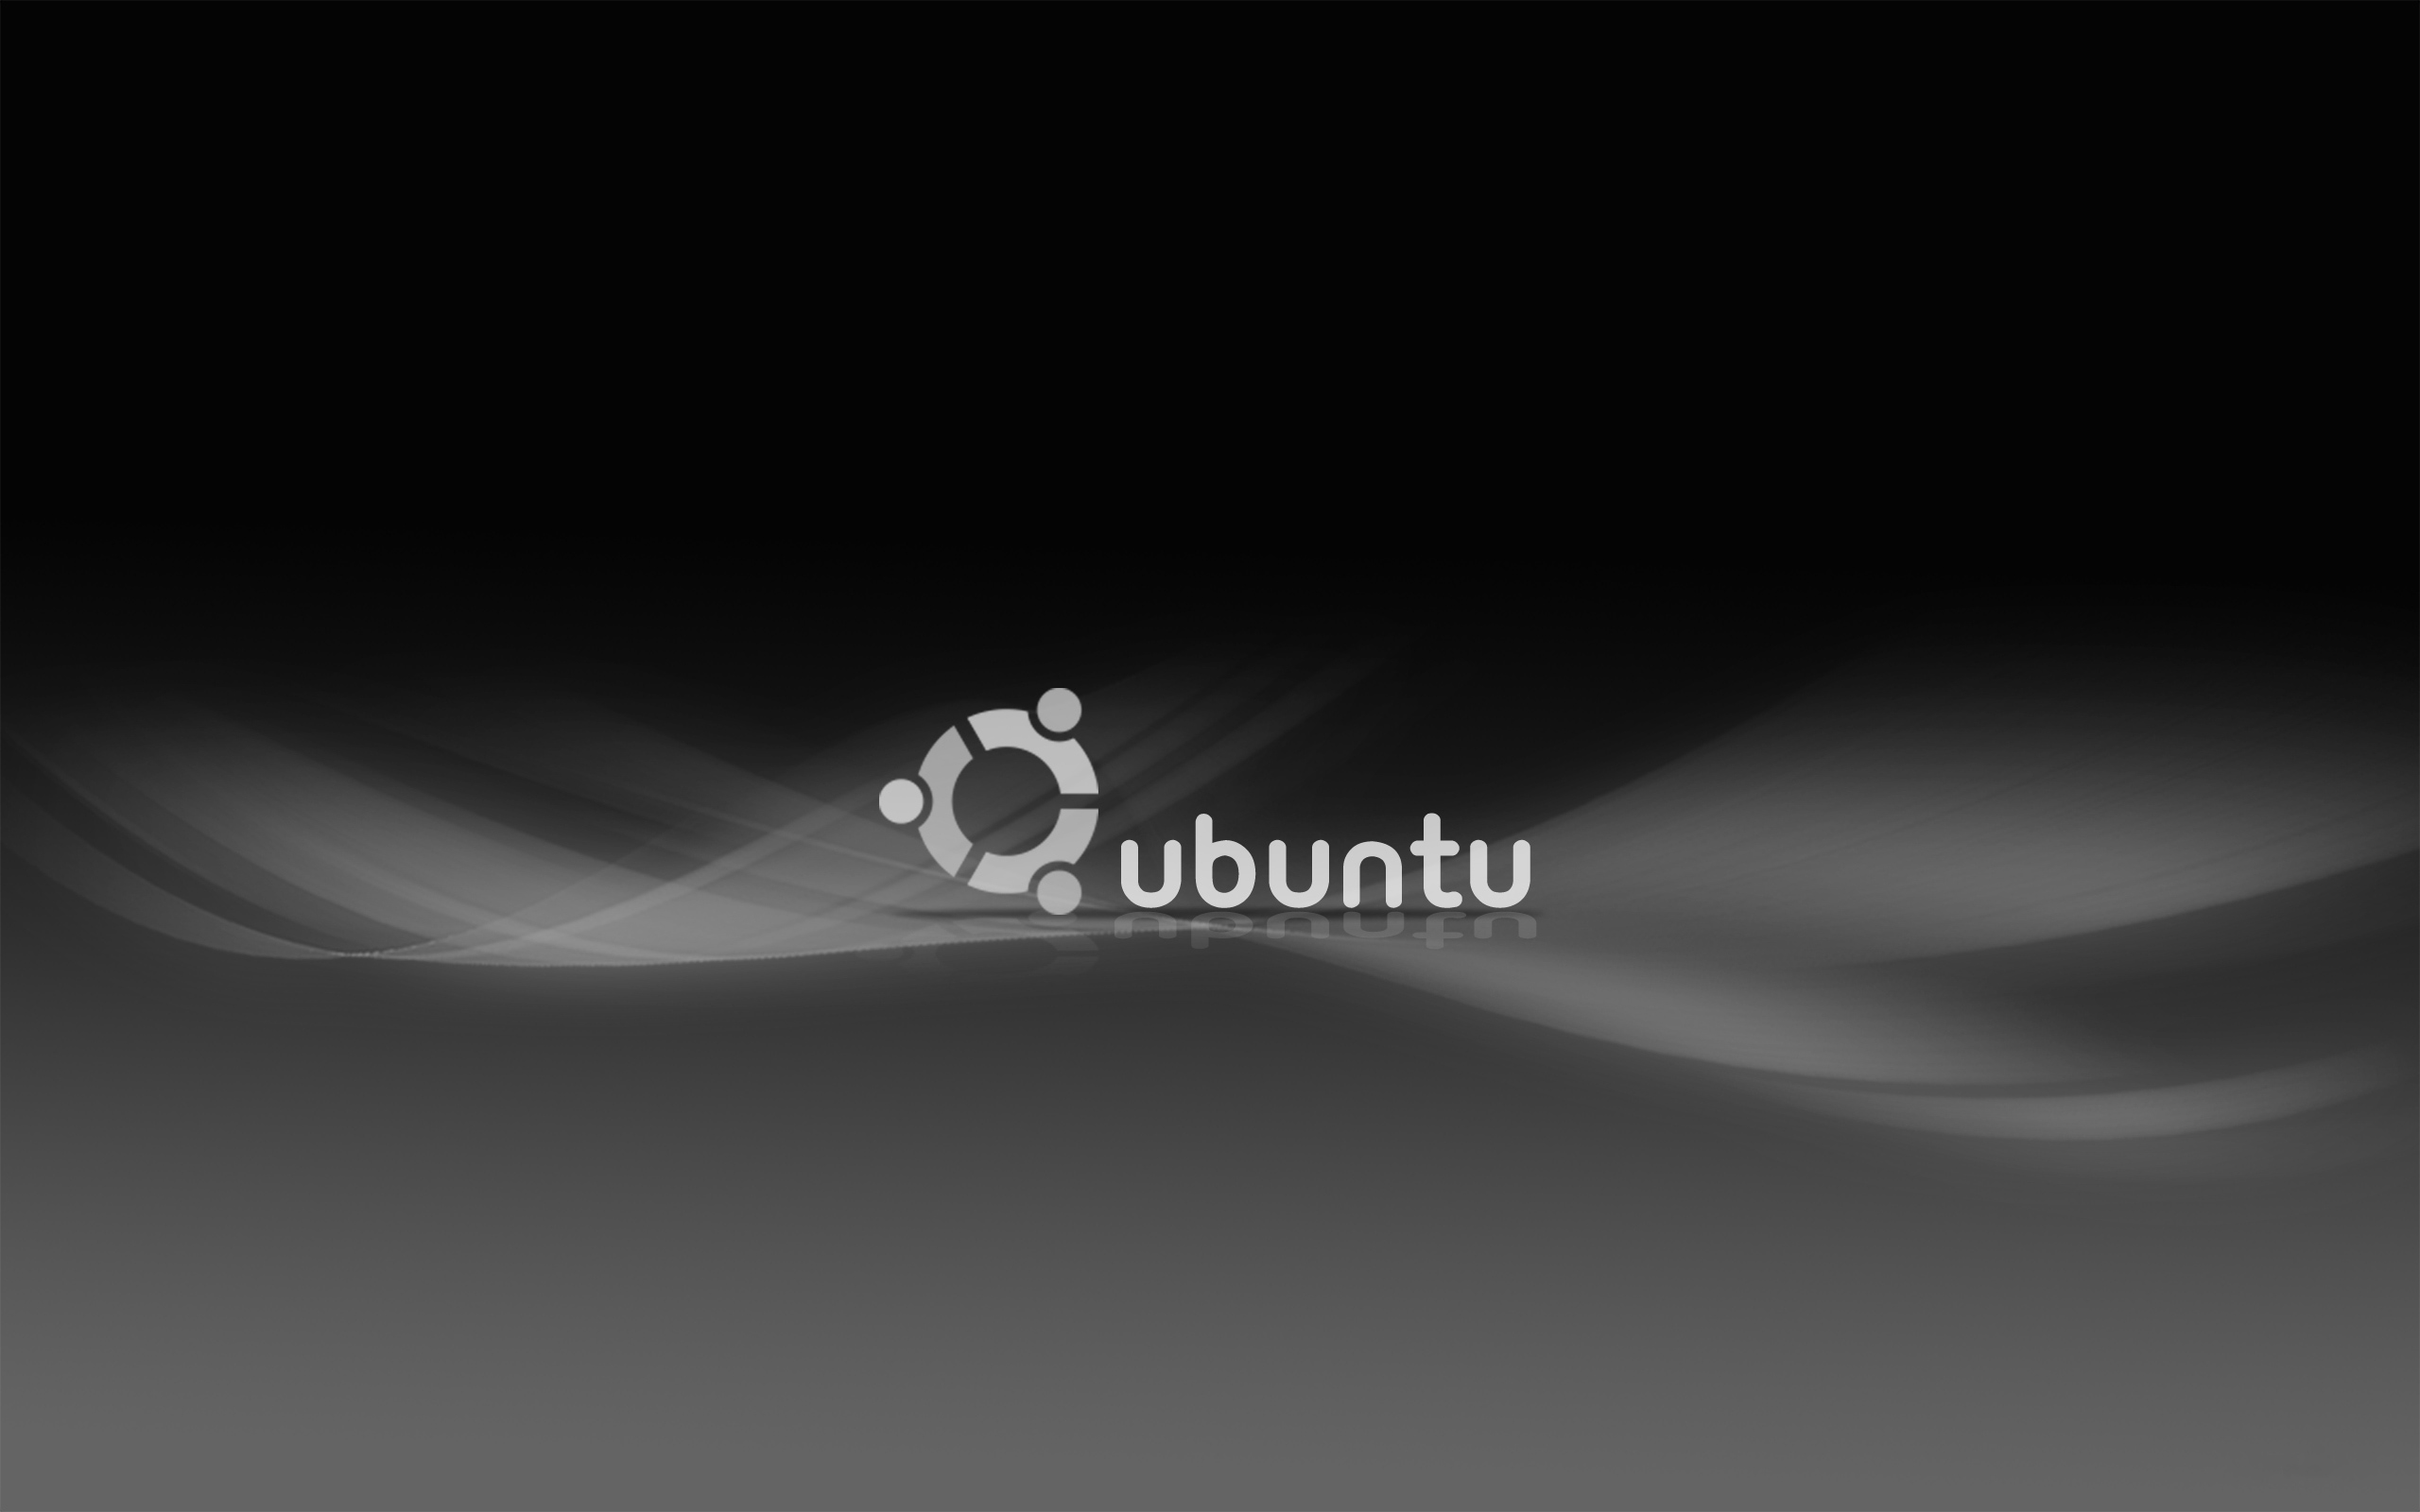 Ubuntu Background High Quality Background Image For Your Pc